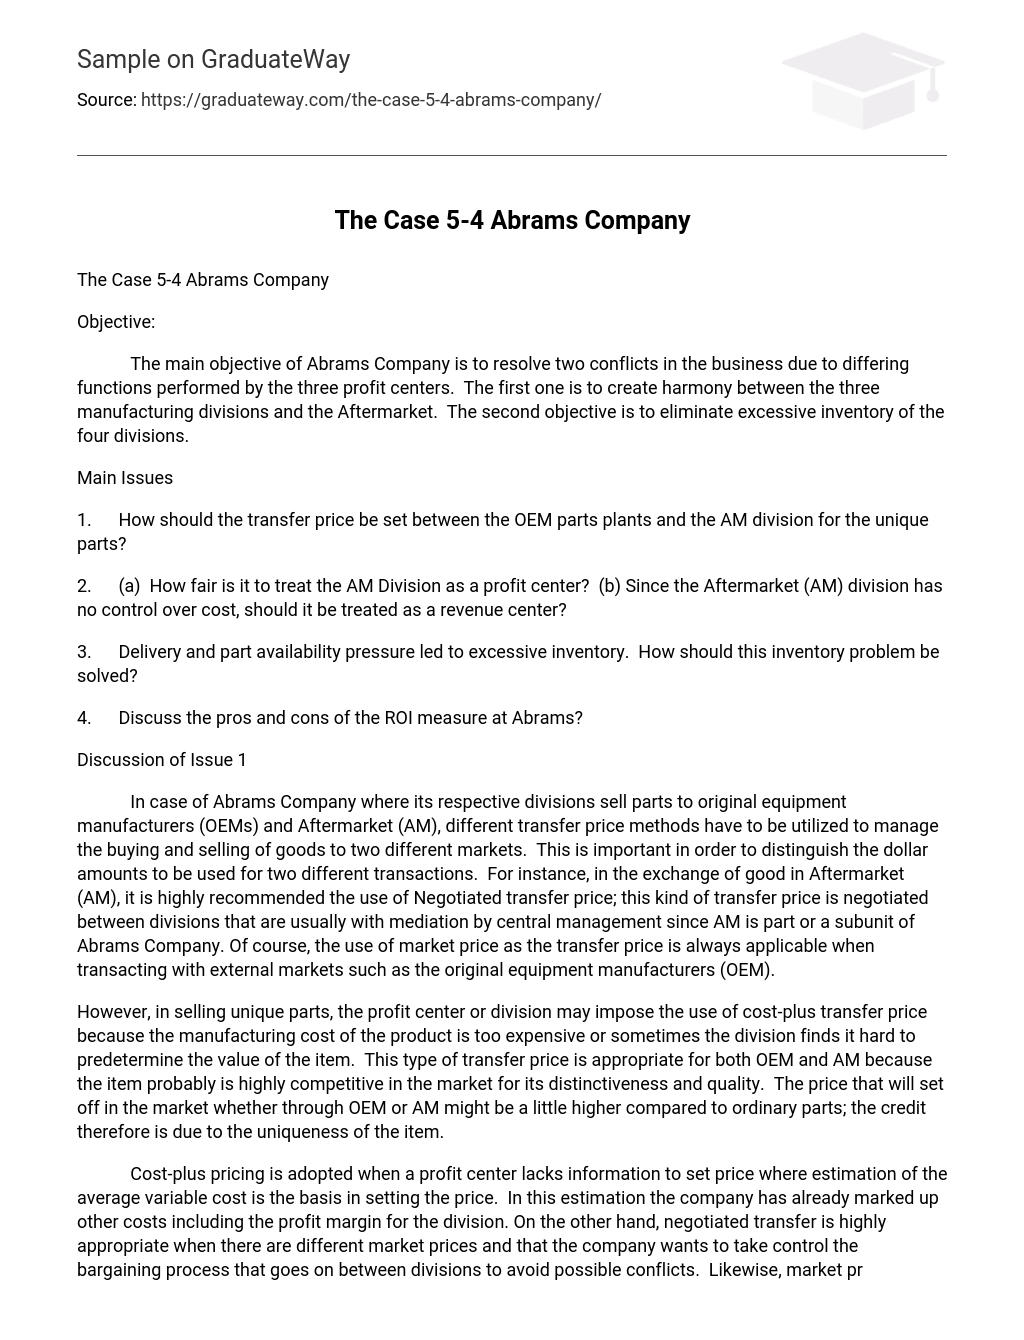 The Case 5-4 Abrams Company